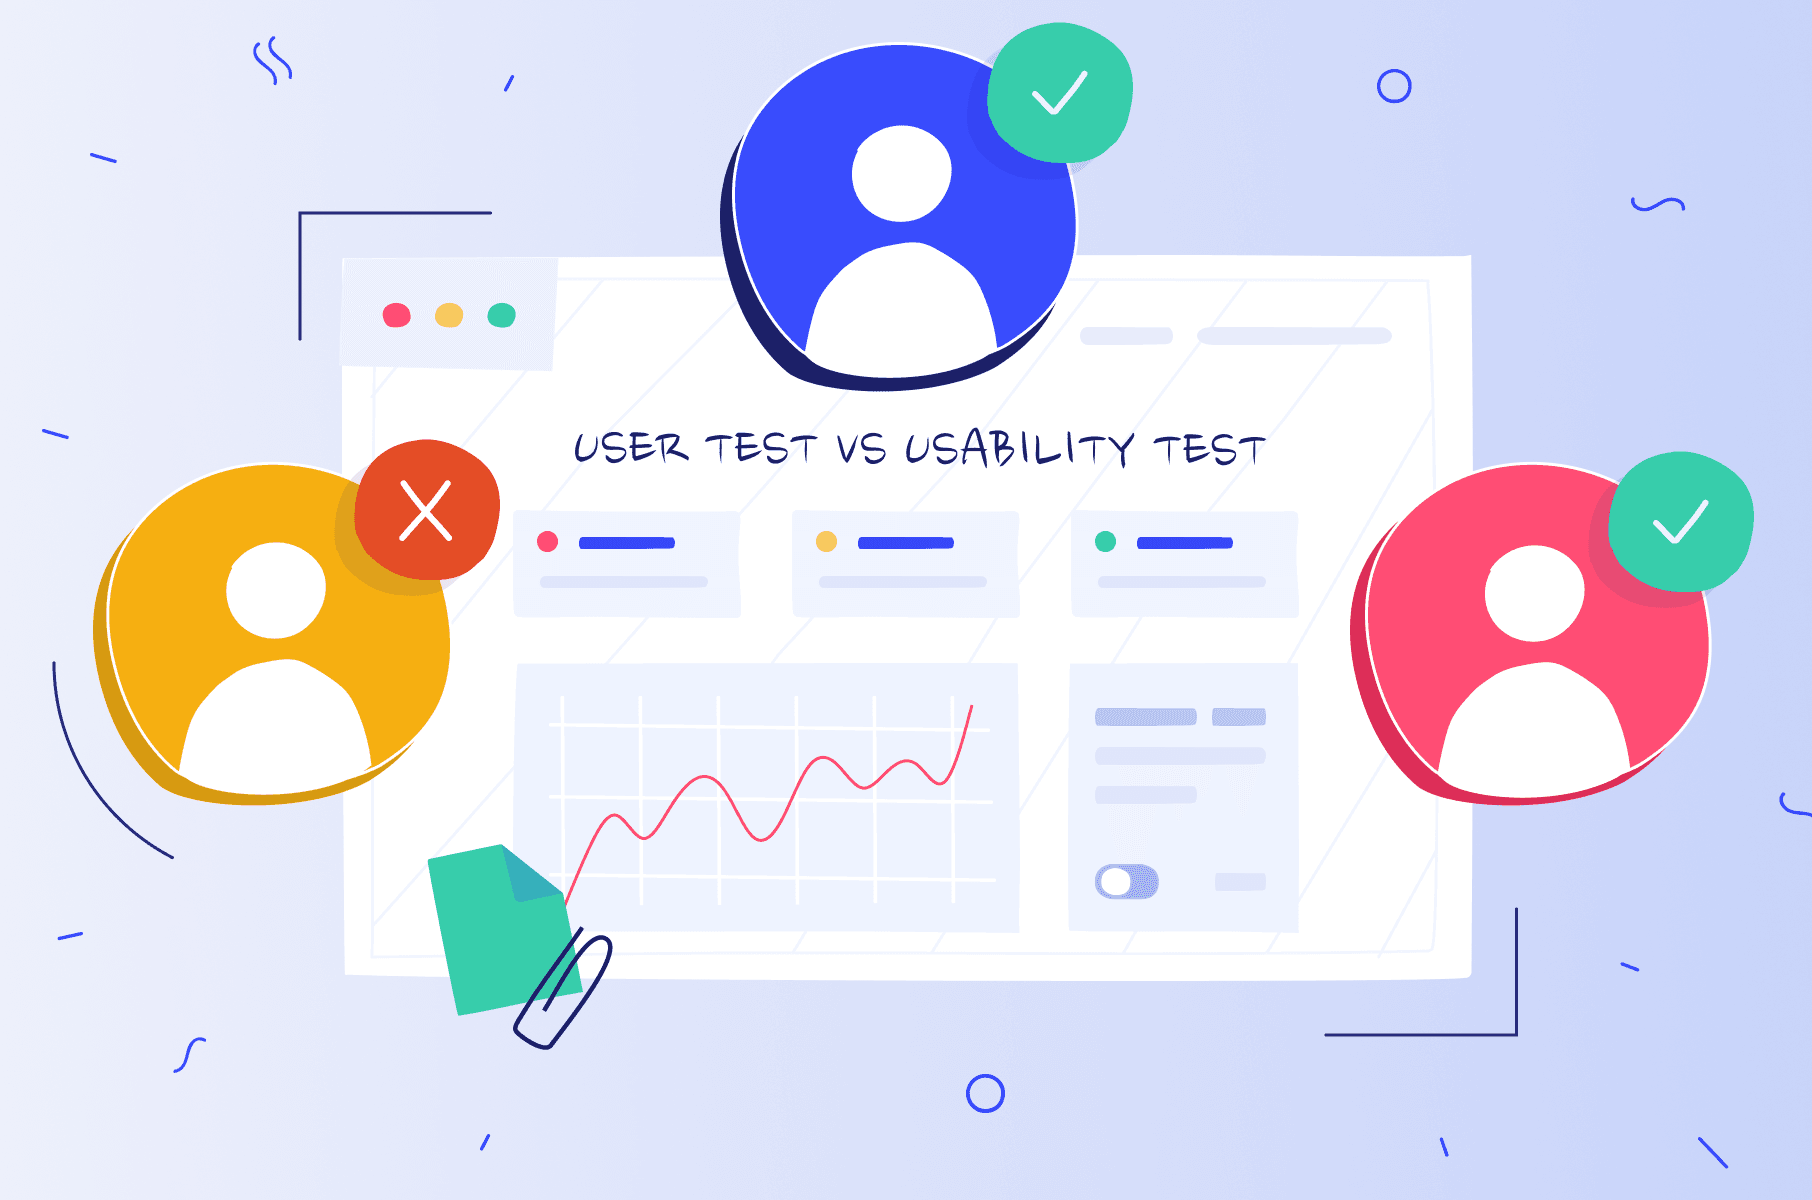 User test versus usability test